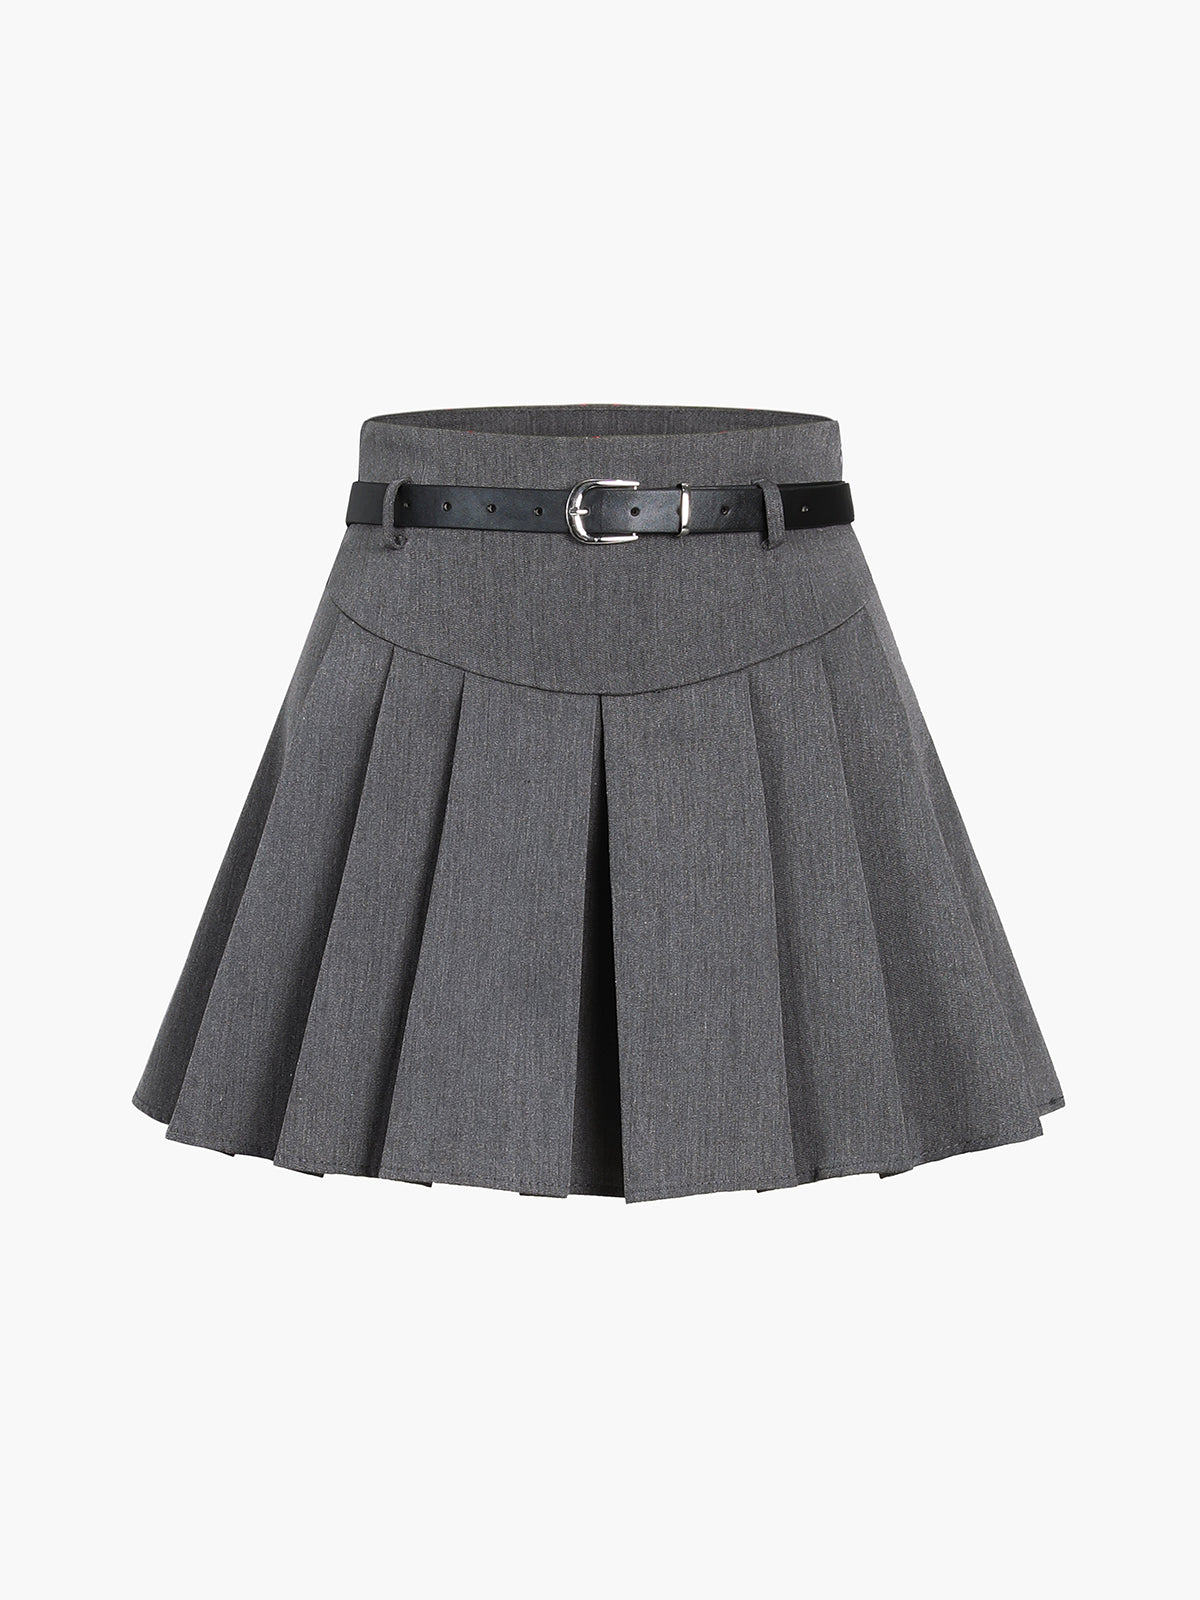 Shine On Belted Pleat Mini Skirt